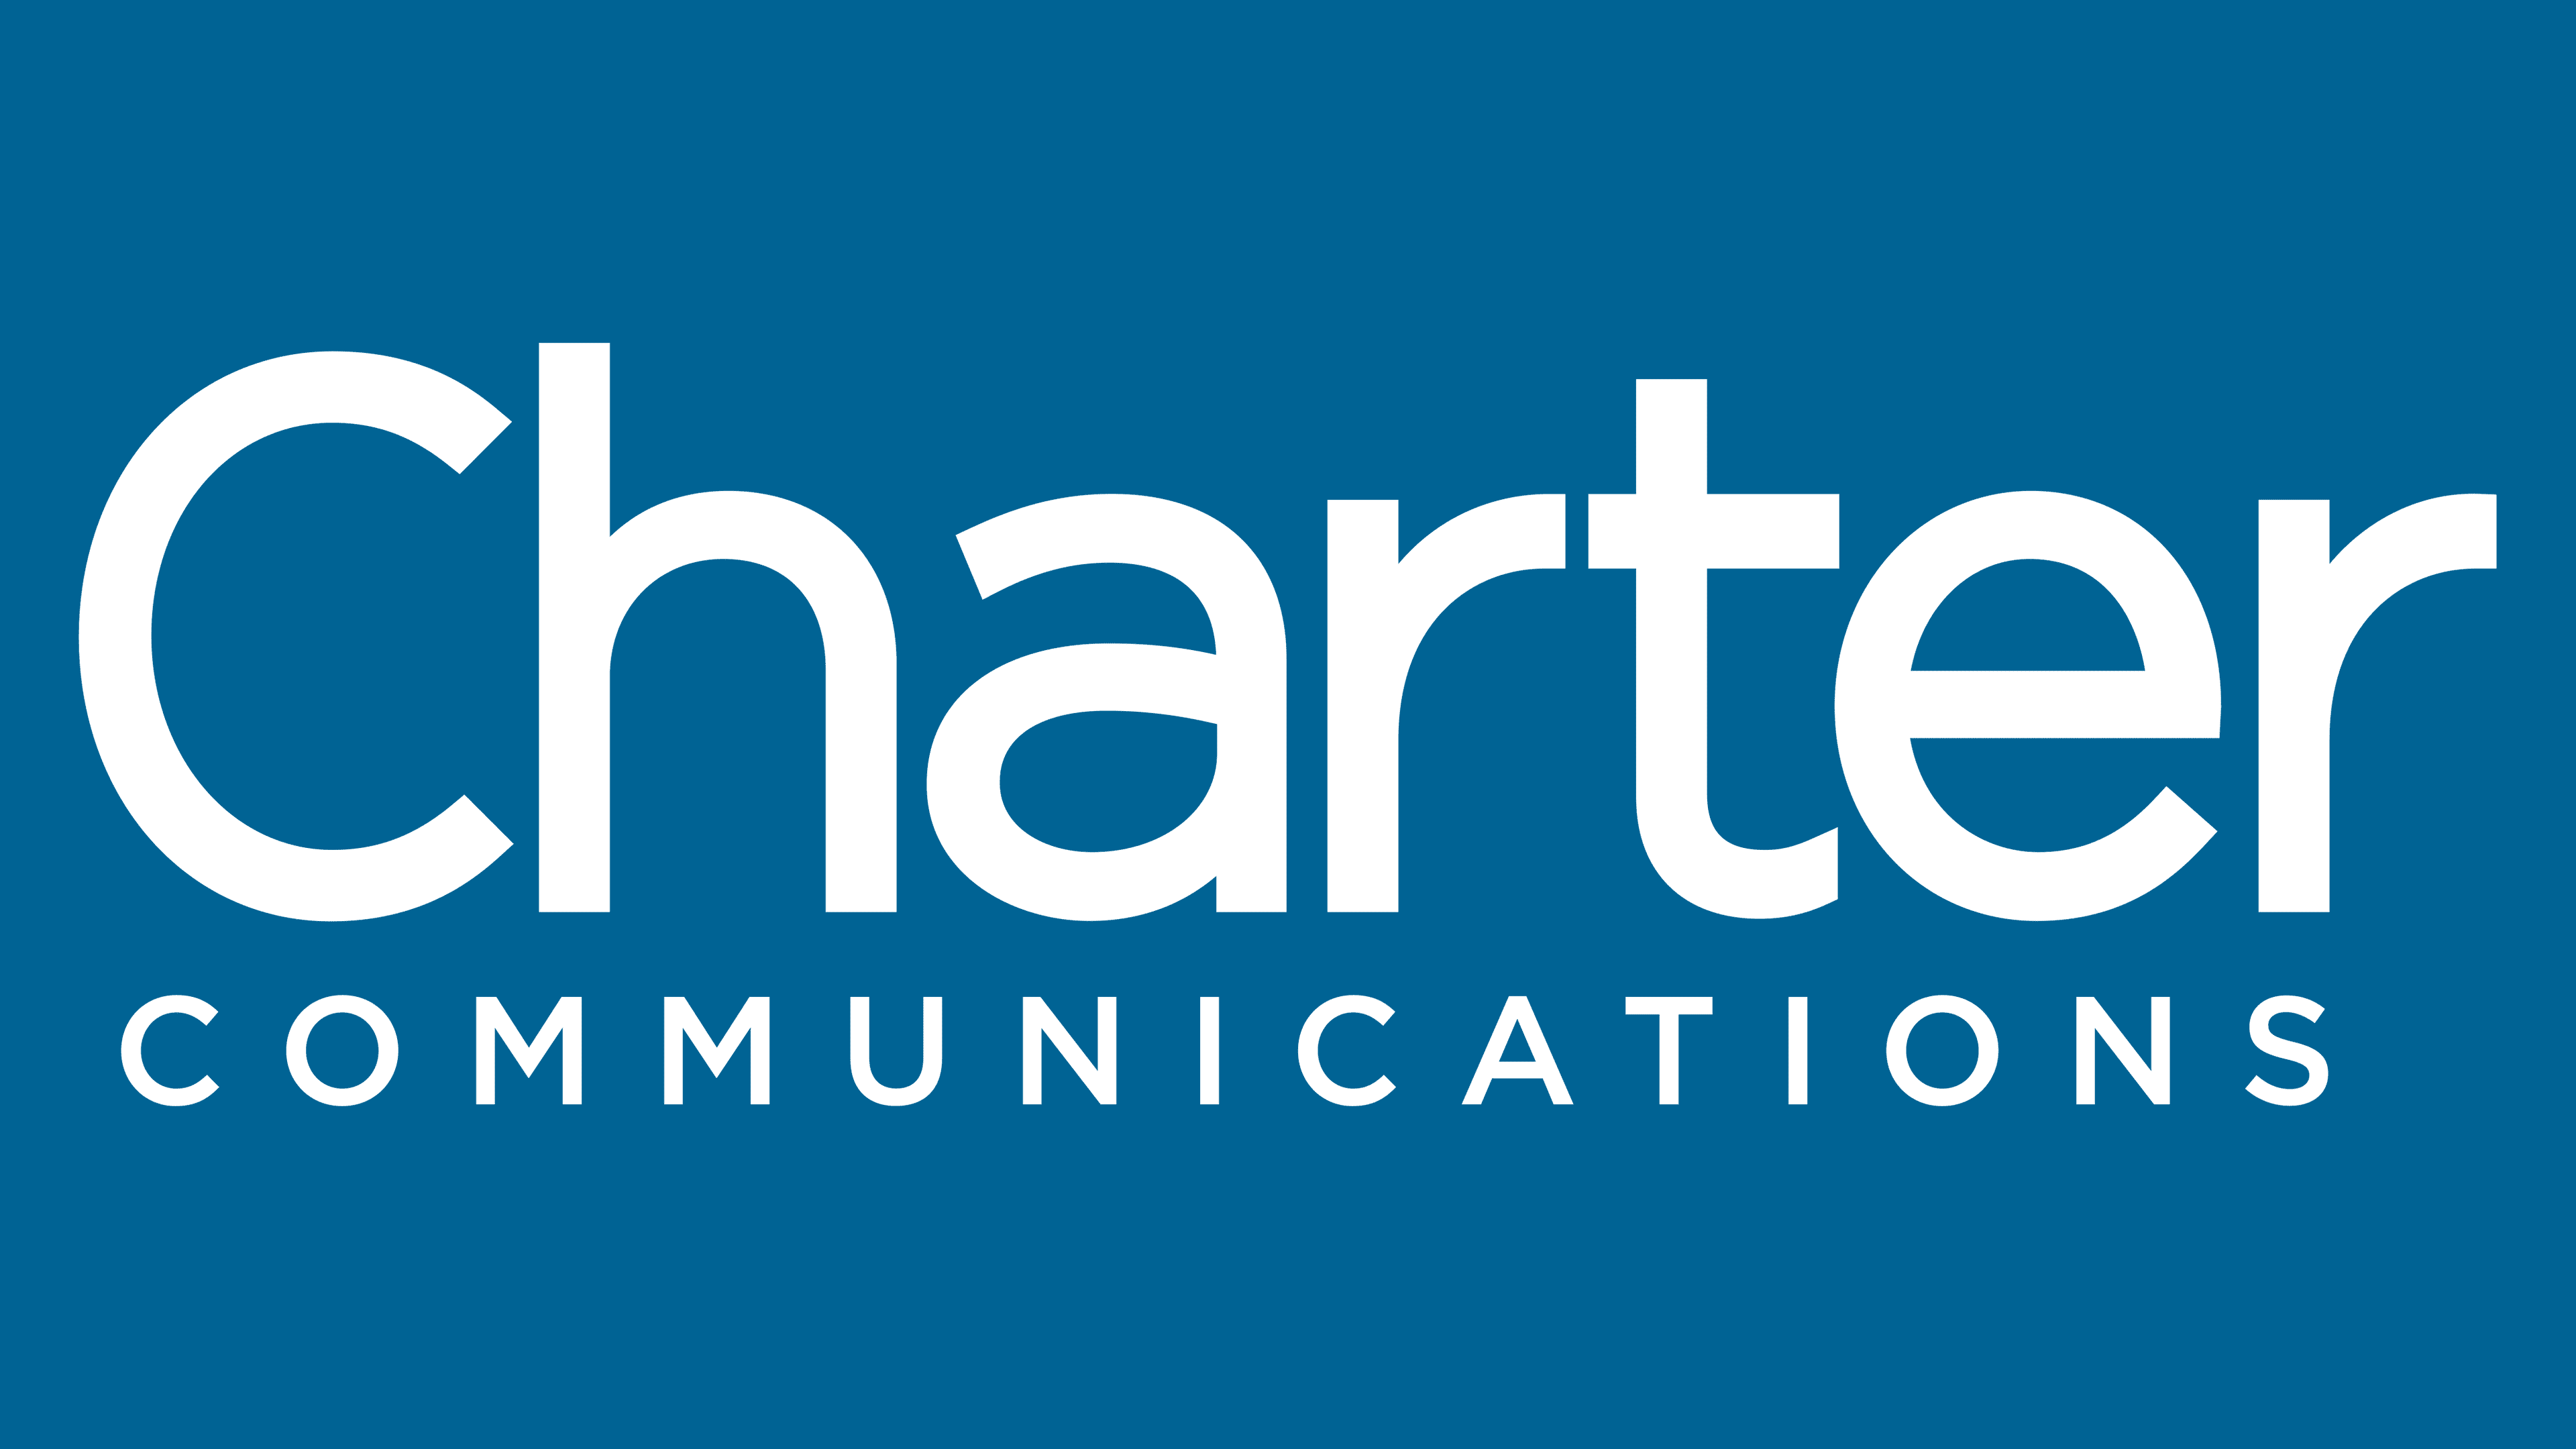 charter logo png